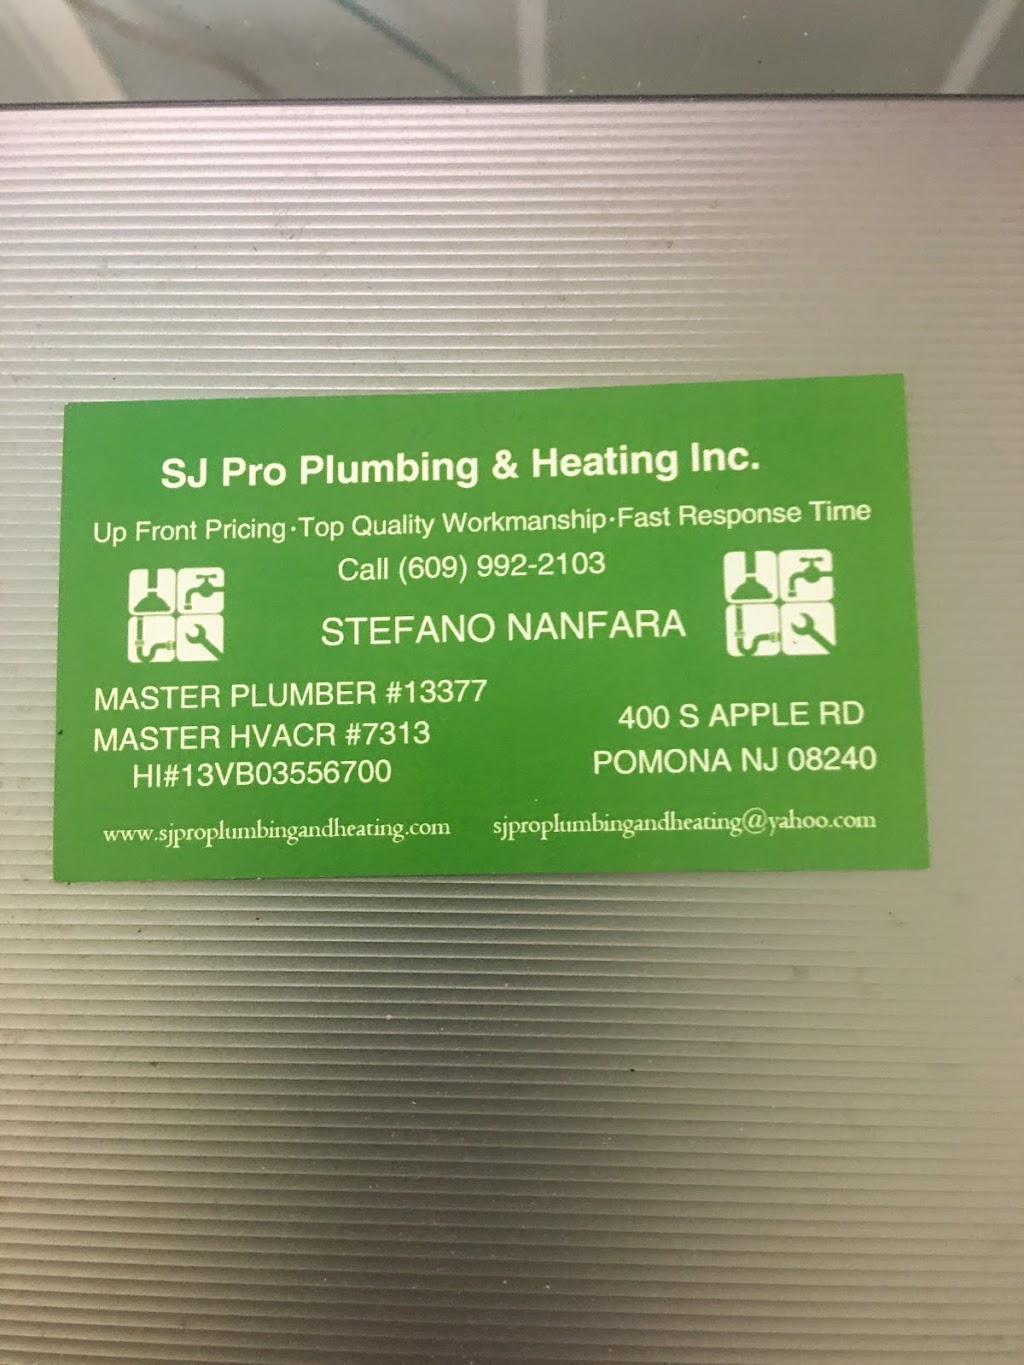 SJ Pro Plumbing and Heating | 400 Apple Dr, Egg Harbor City, NJ 08215 | Phone: (609) 404-8913